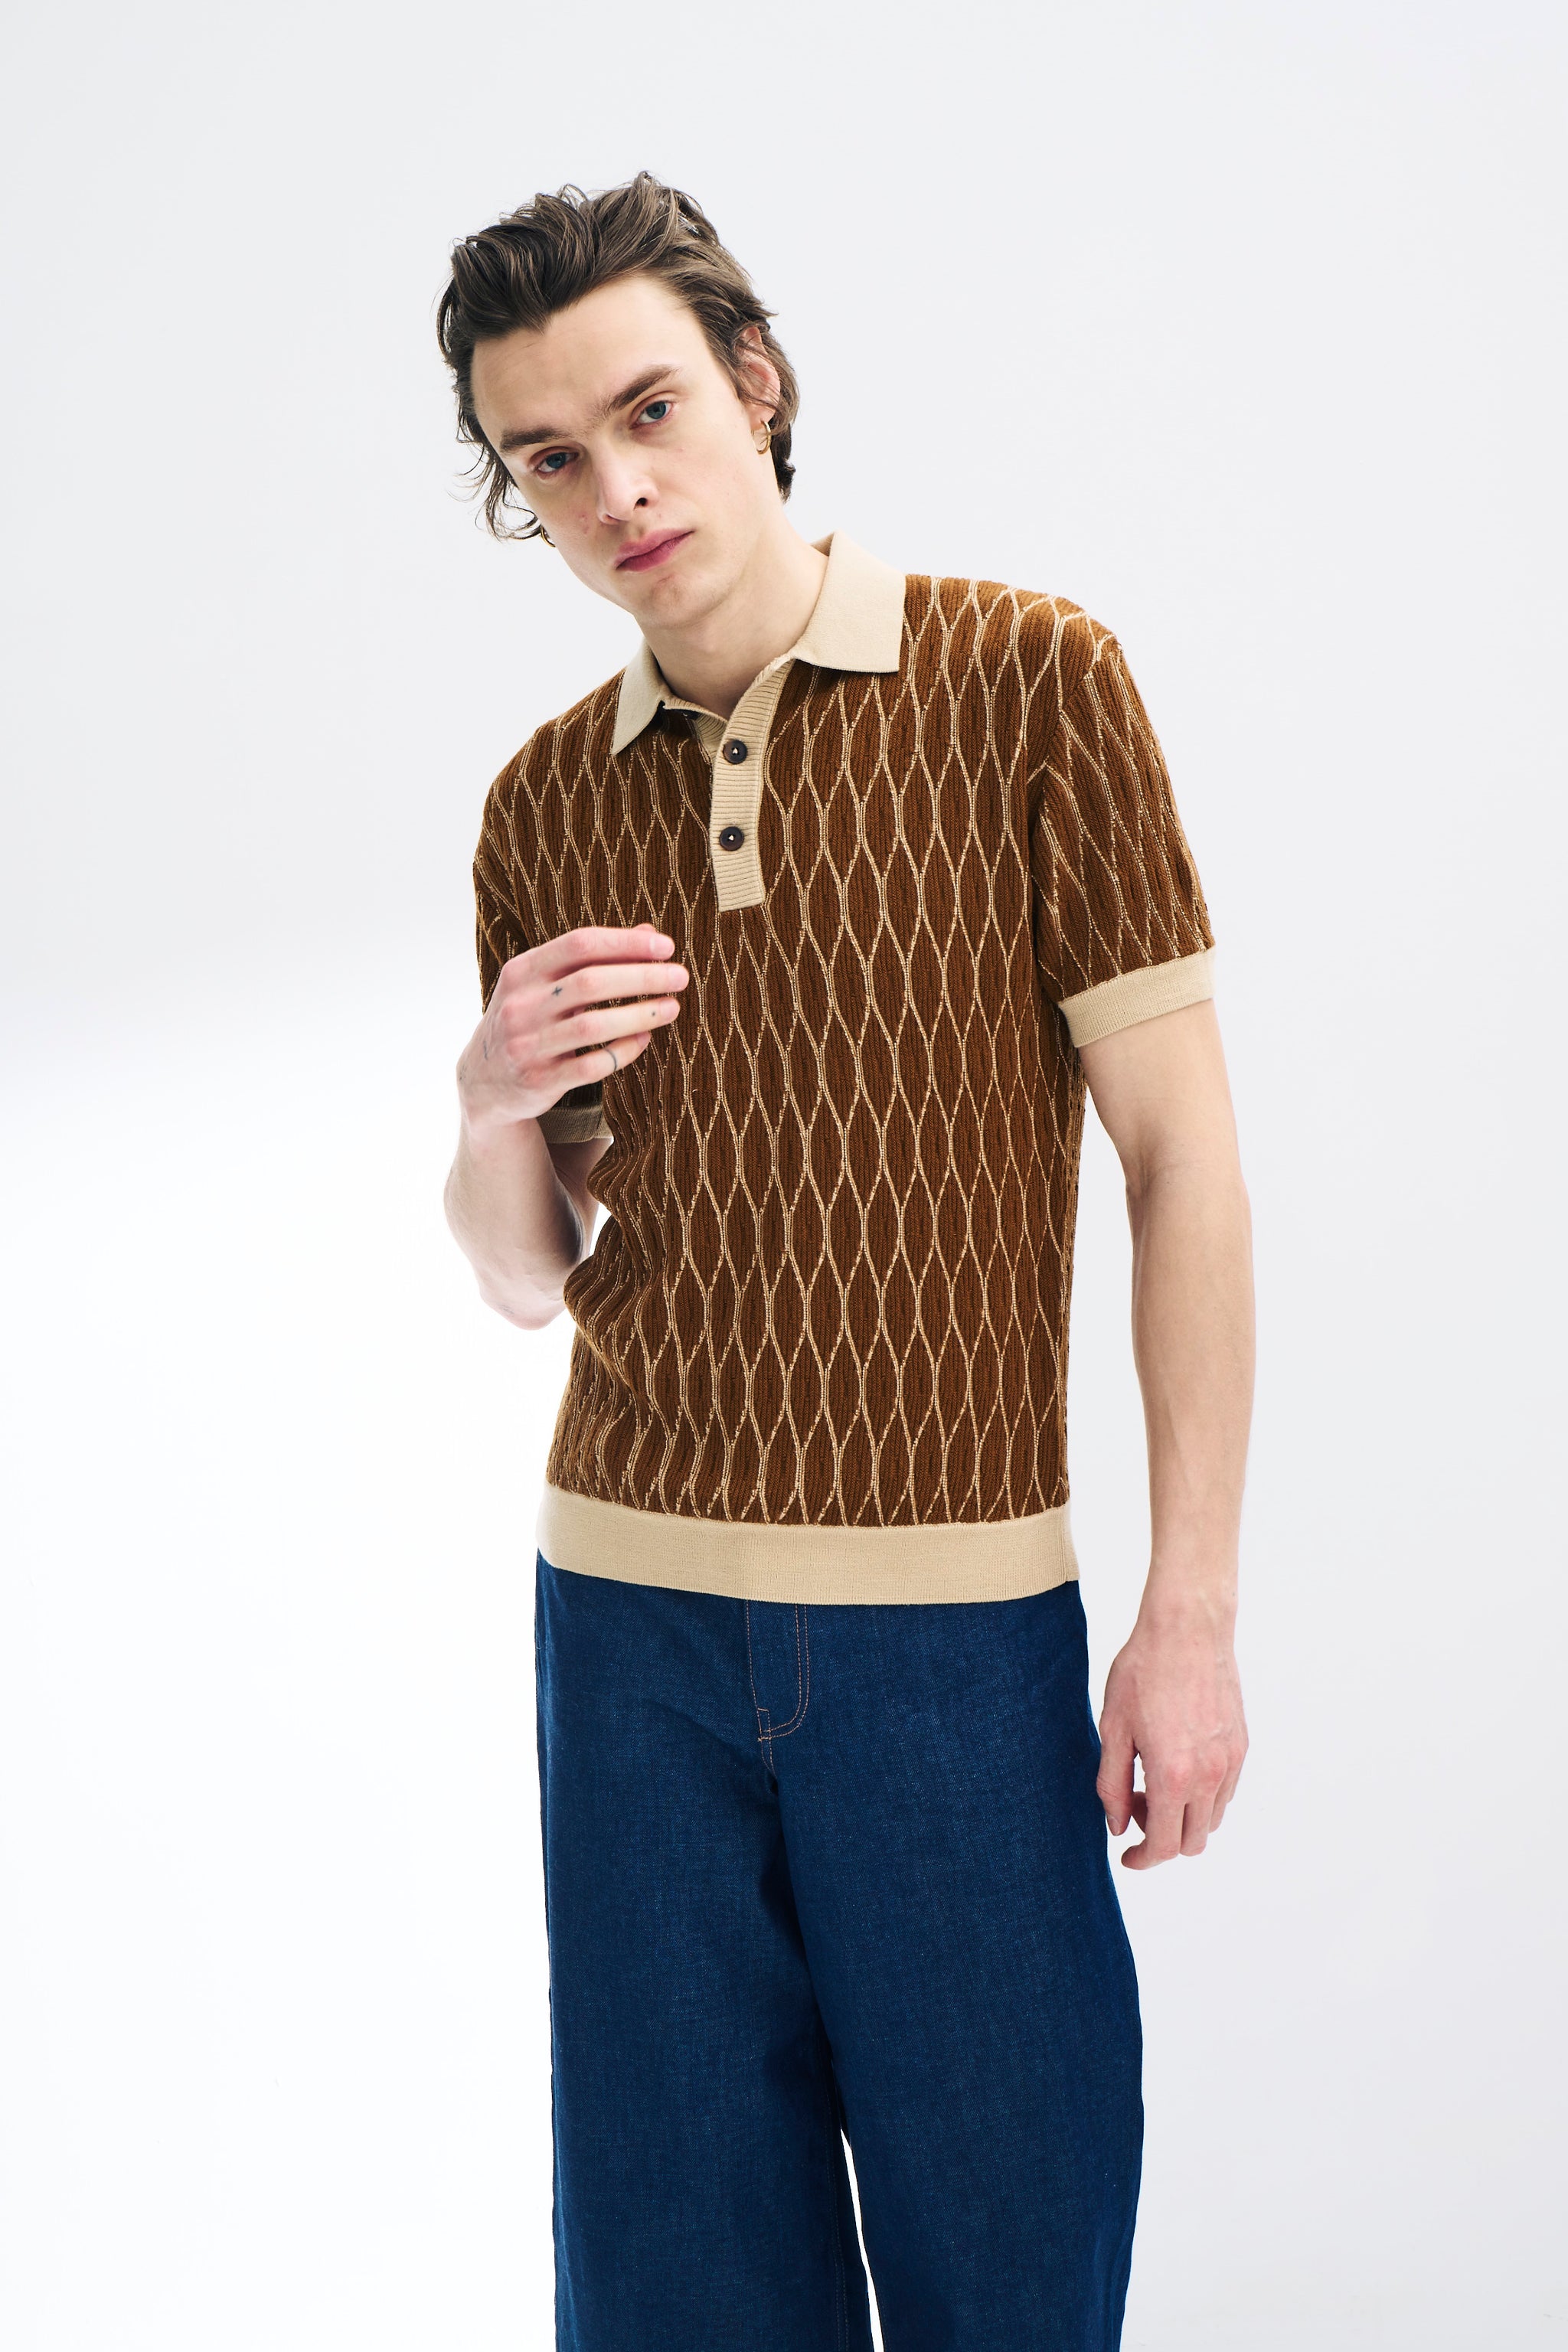 Textured Pattern Merino Wool Polo – King & Tuckfield